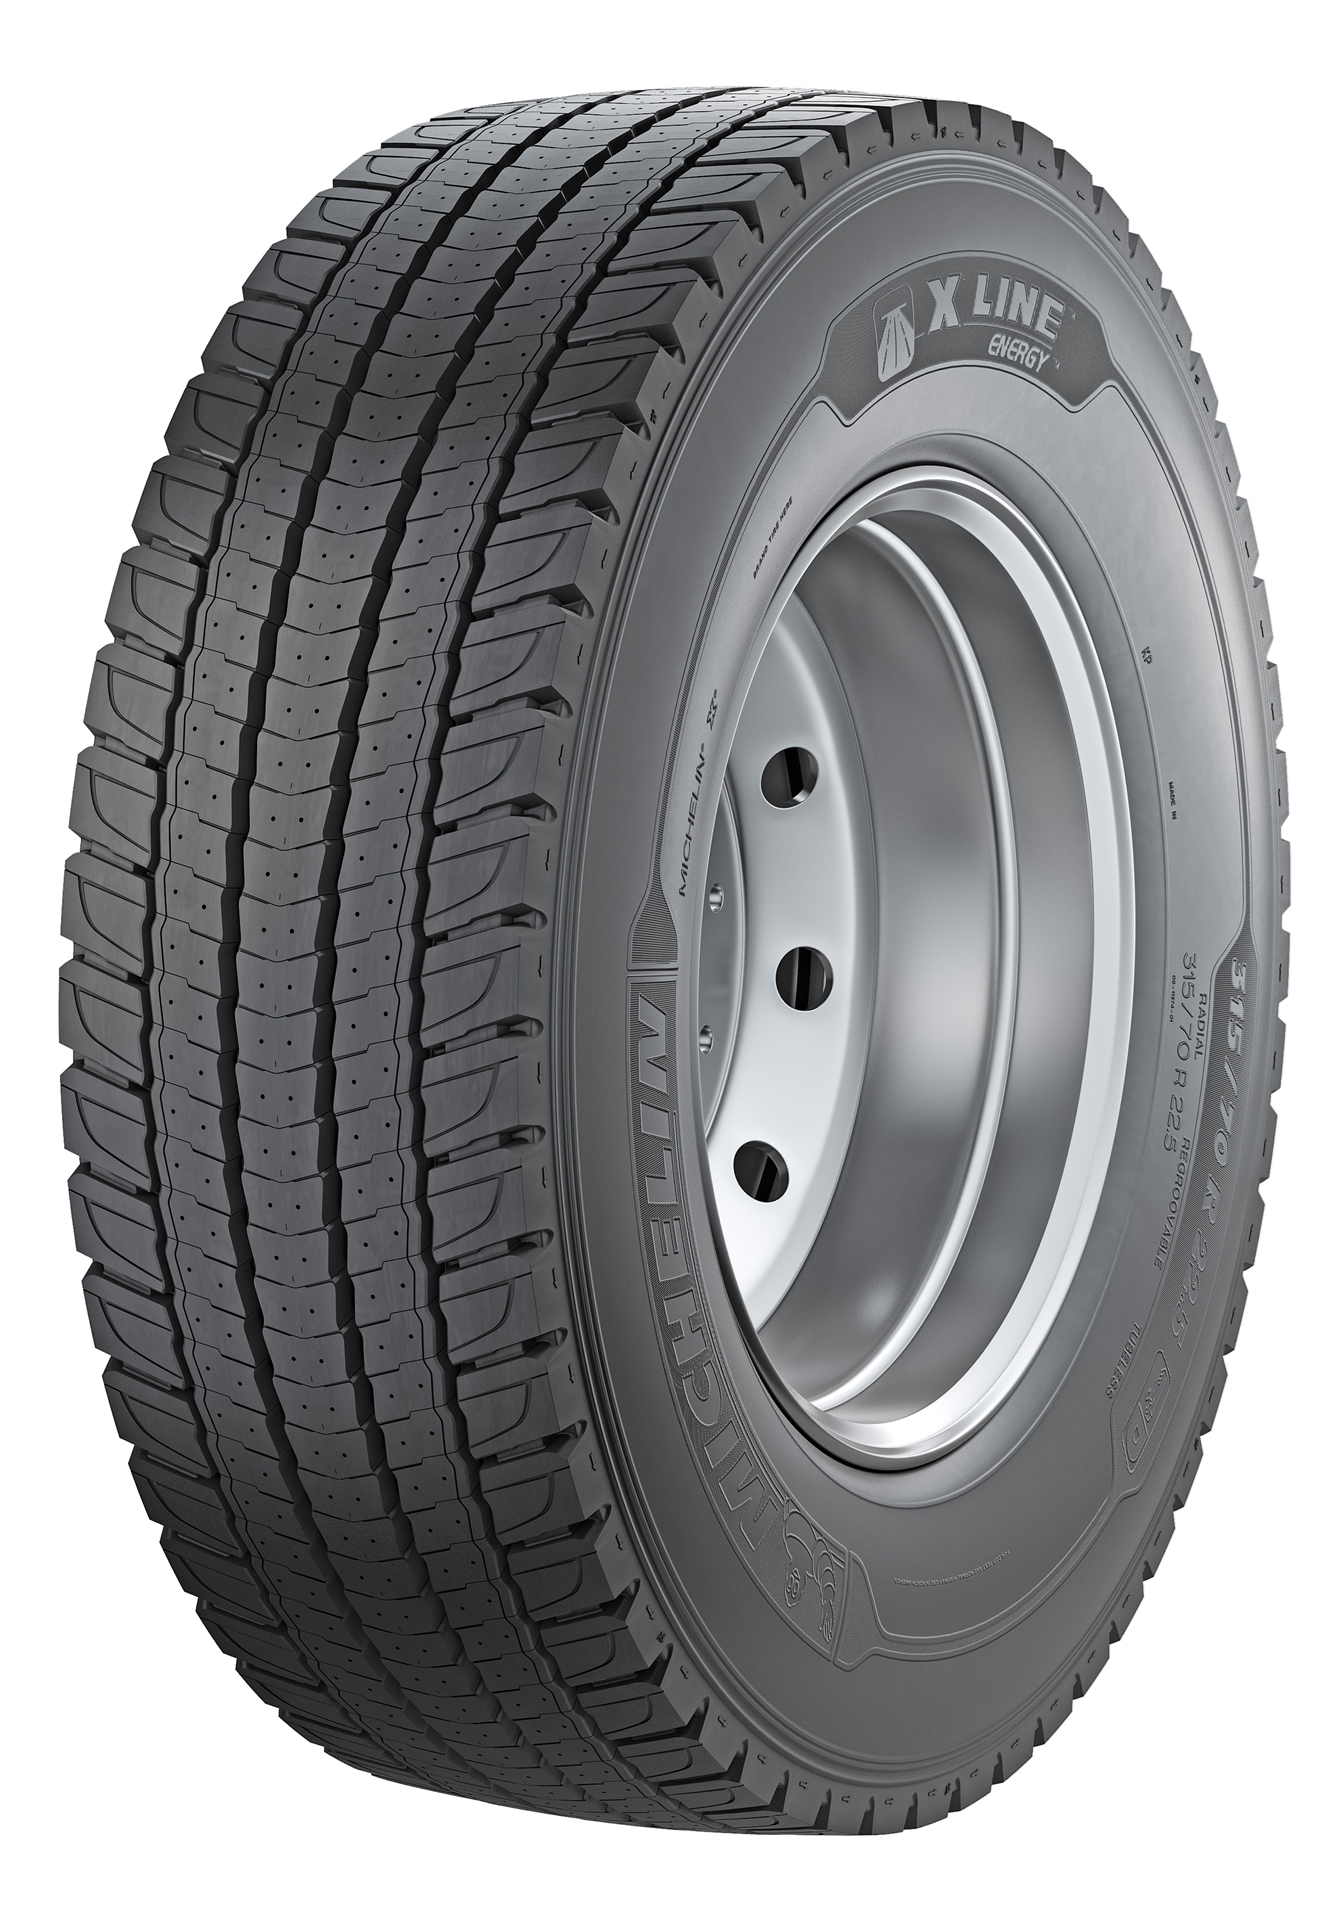 Gomme Nuove Michelin 315/60 R22.5 152/148L X LINE ENERGY D S60 M+S (8.00mm) pneumatici nuovi Estivo